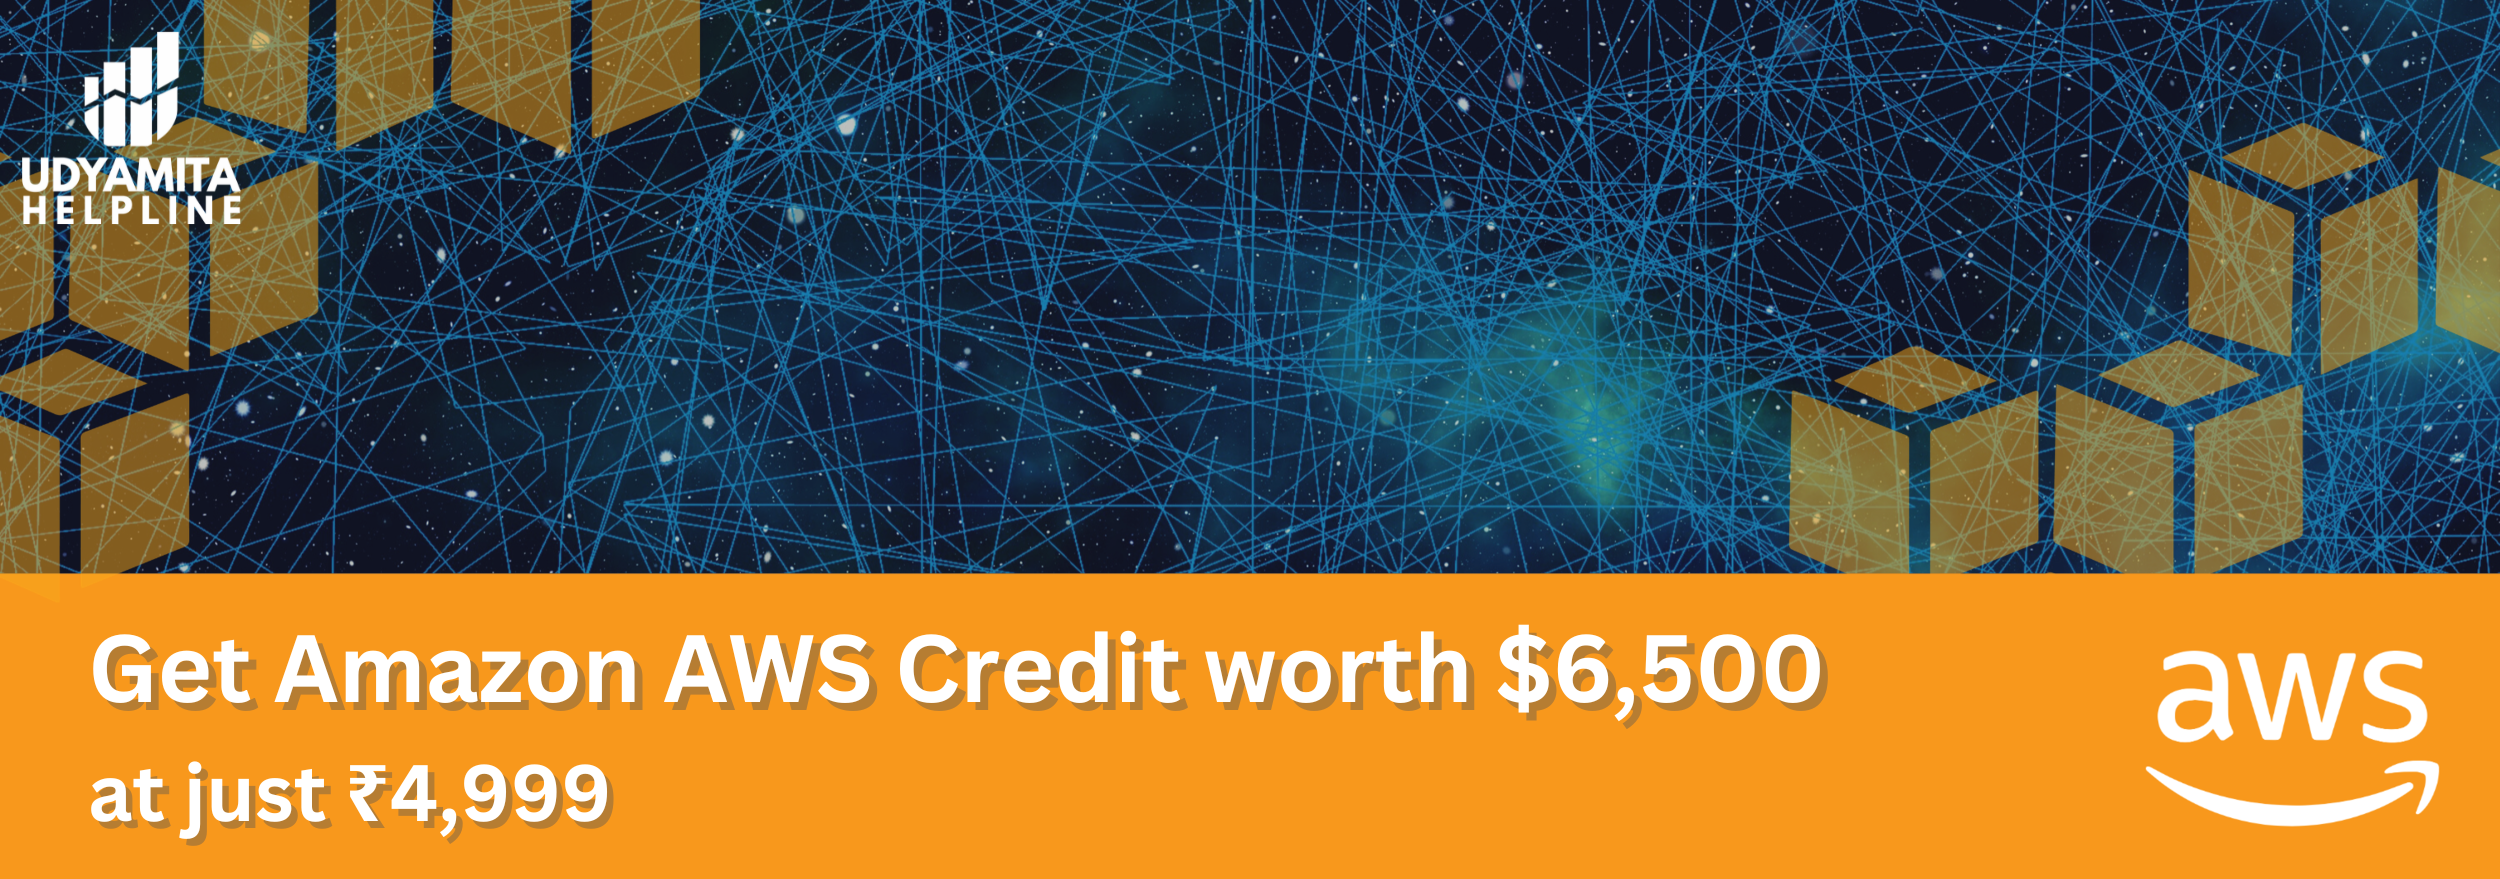 AWS Credit worth upto 6500